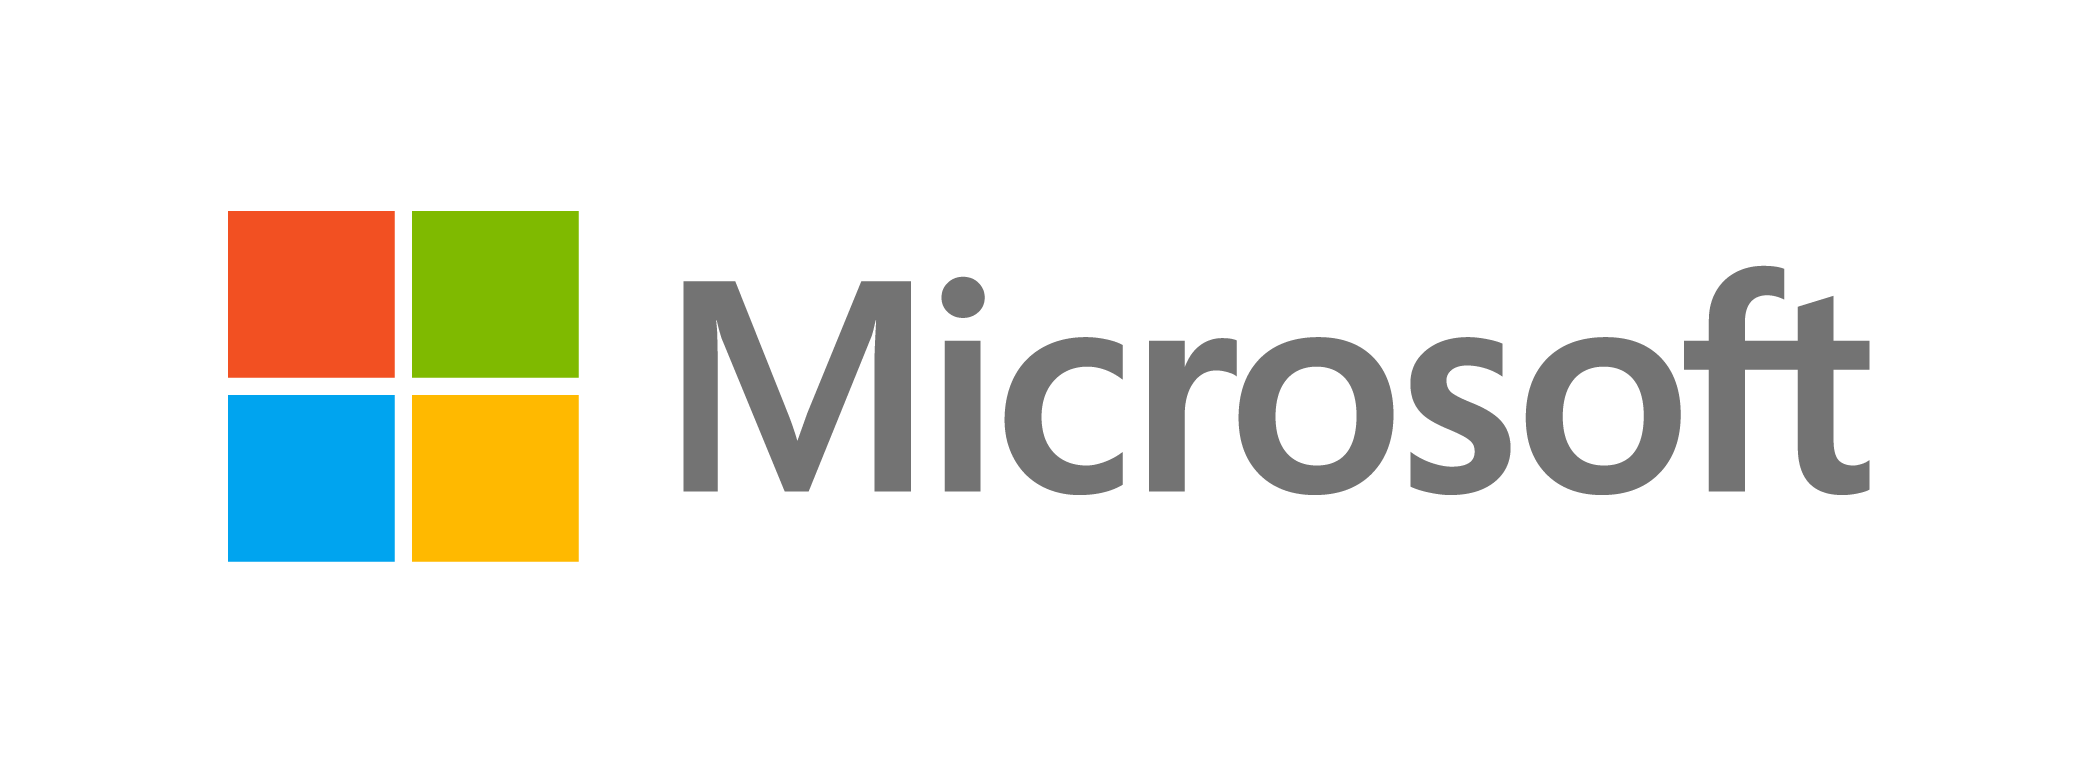 a Microsoft microsoftos